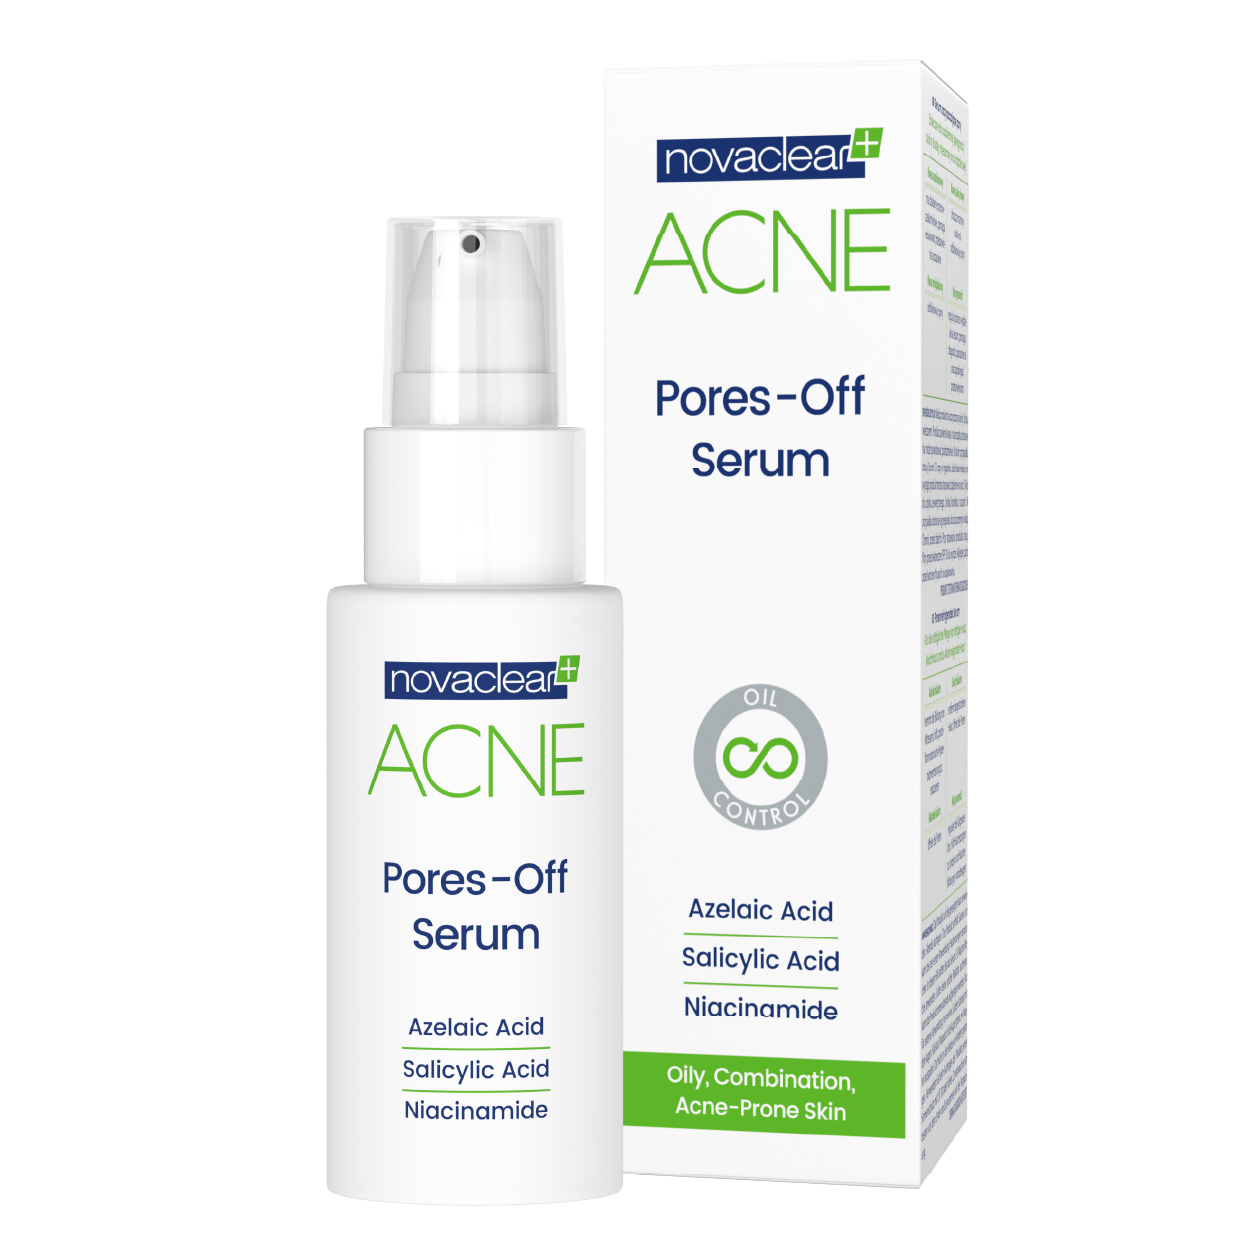 novaclear-acne-poress-off-serum-box